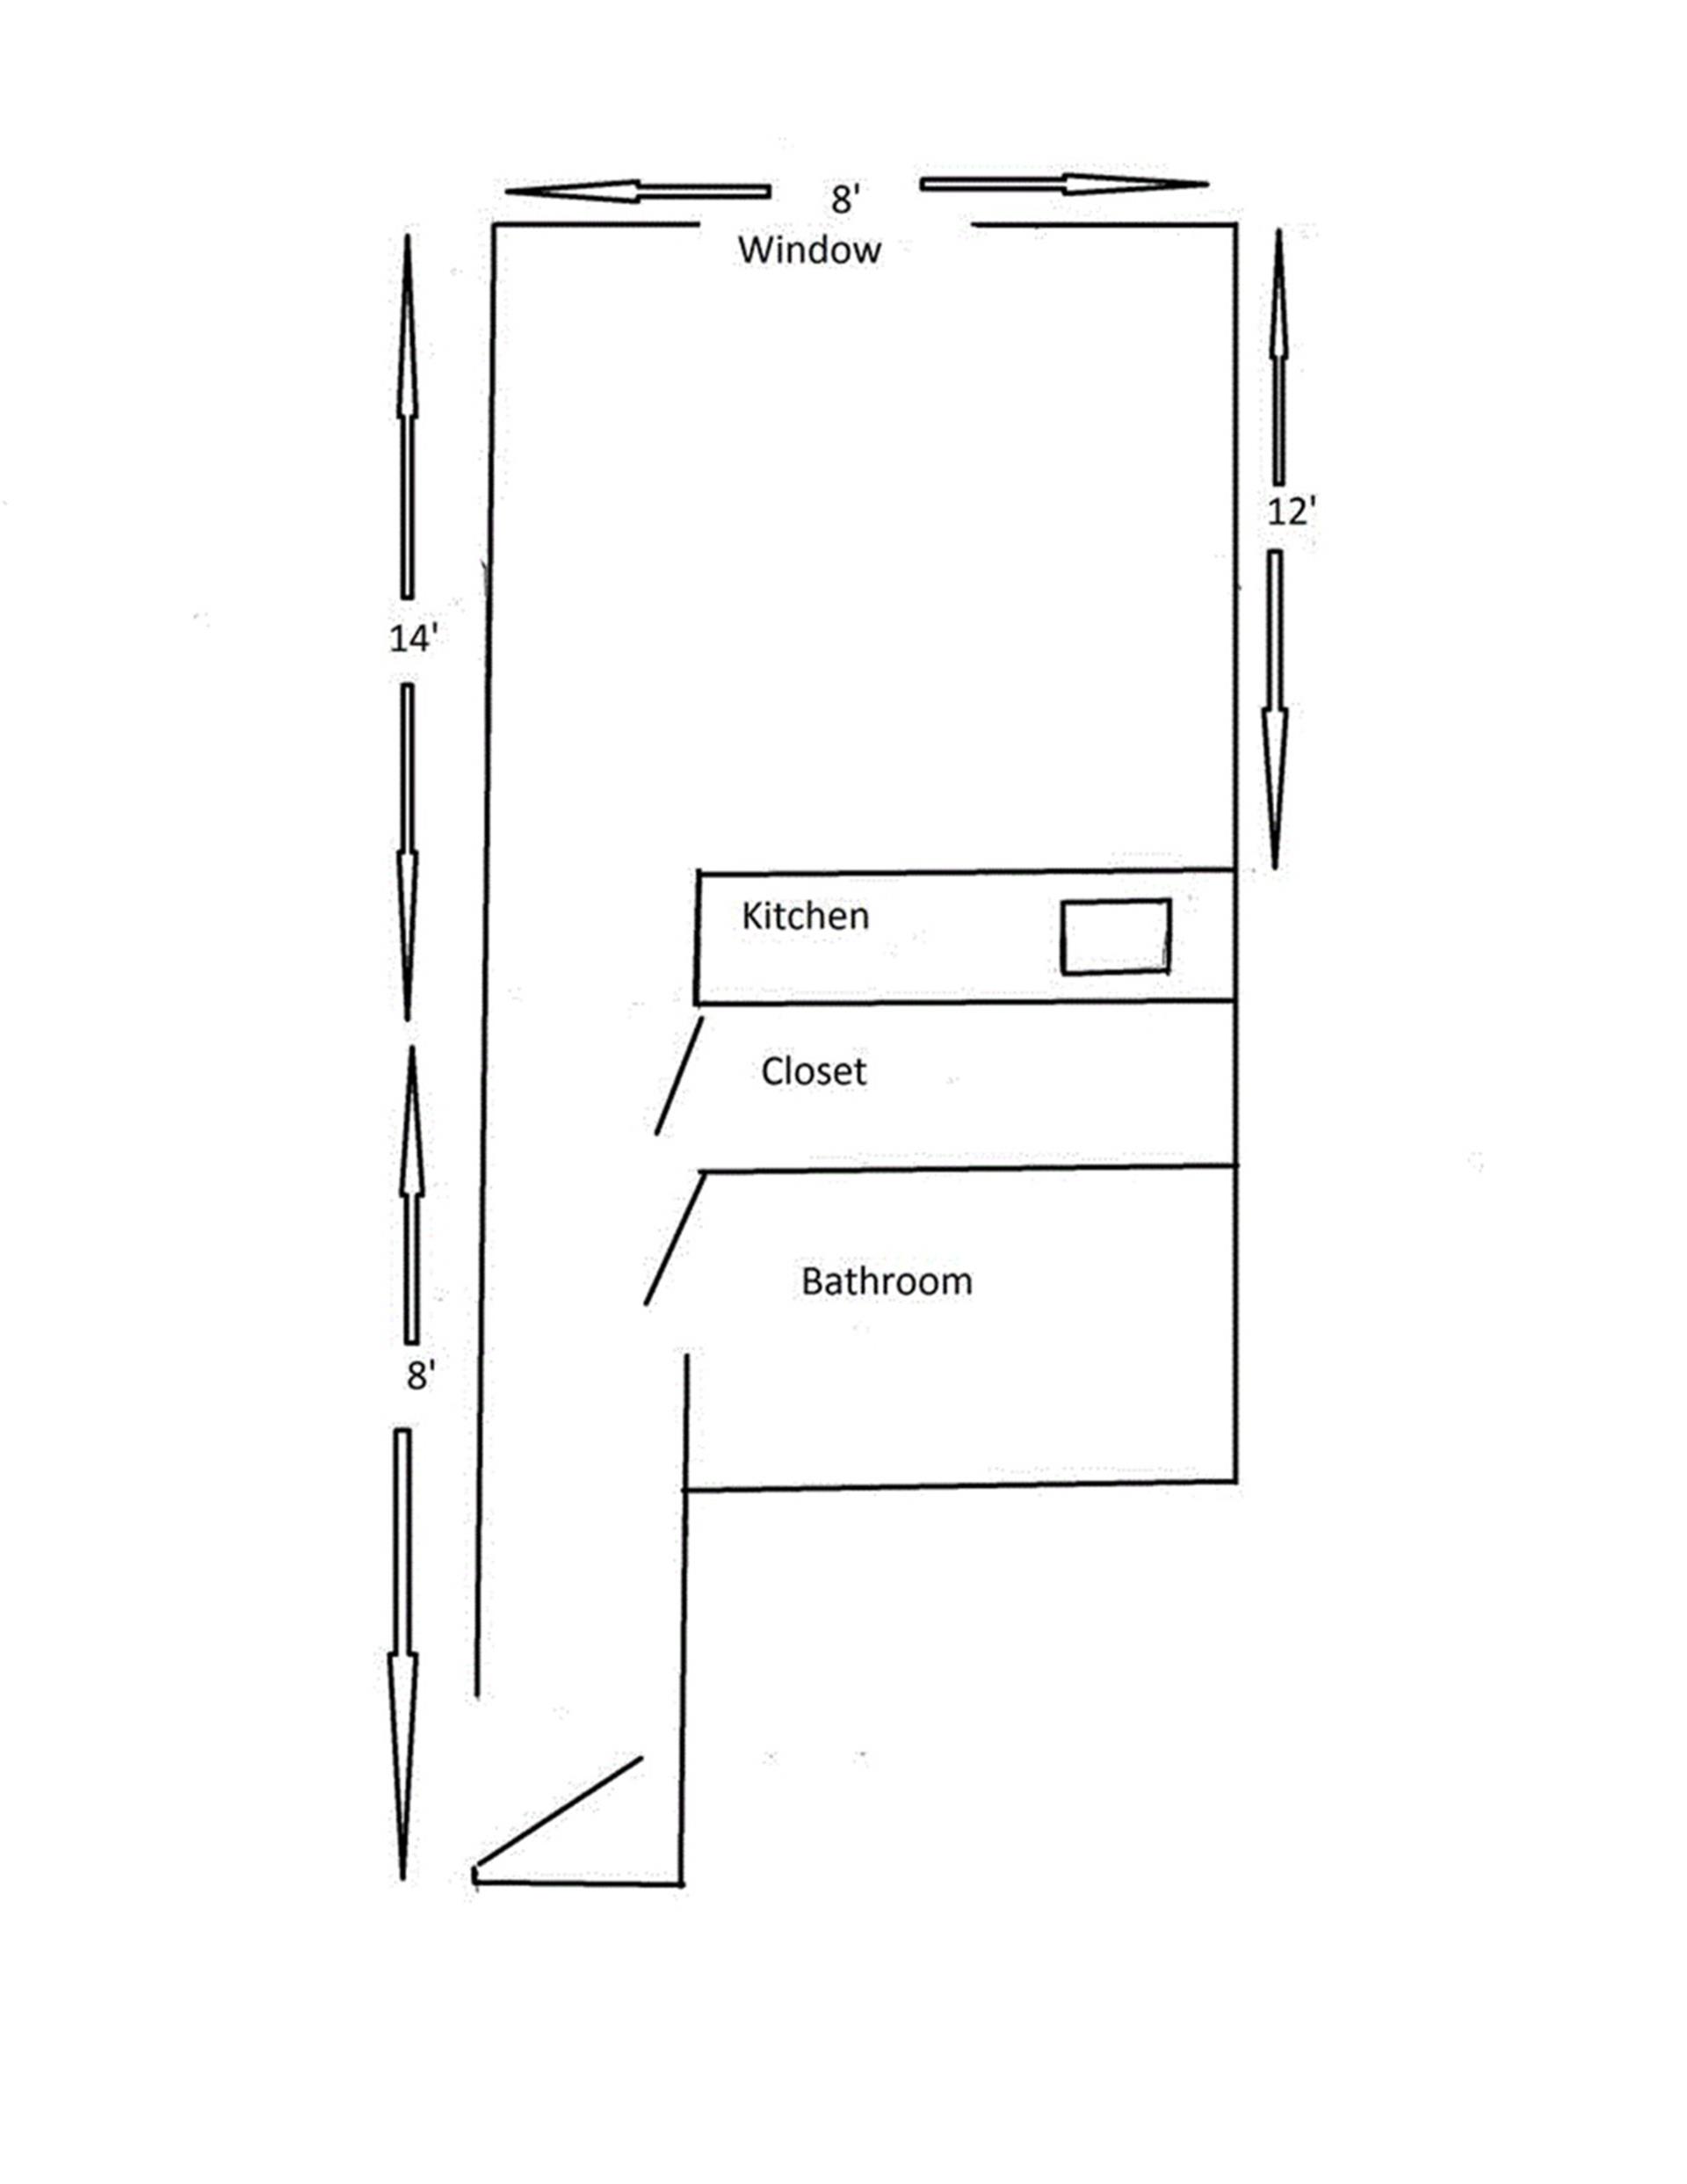 Floorplan for 135 East 54th Street, MR4